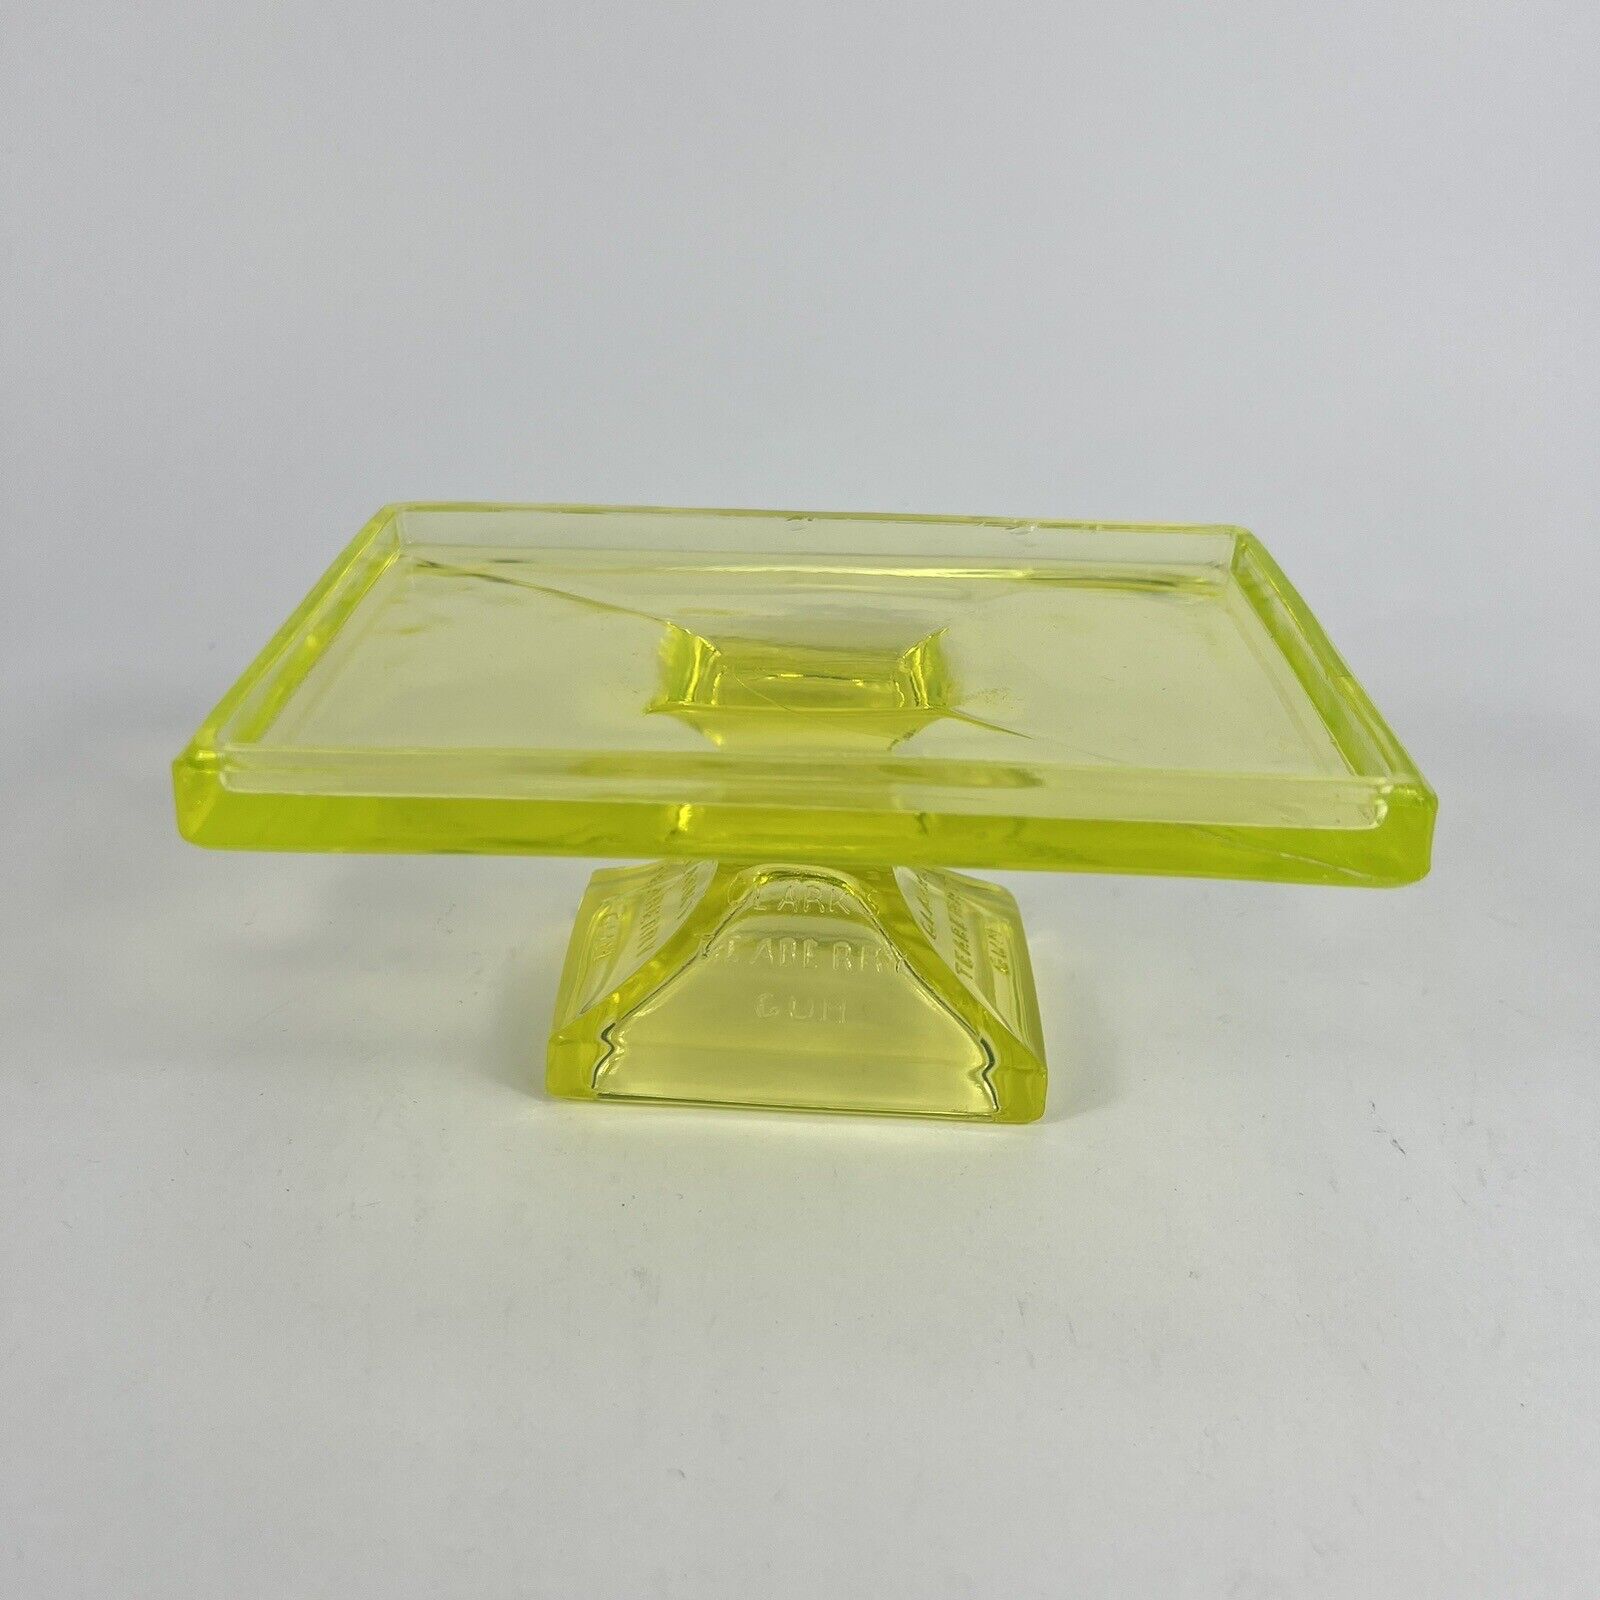 Vintage CLARKS TEABERRY GUM Pedestal Display Stand Uranium Vaseline Glass chip